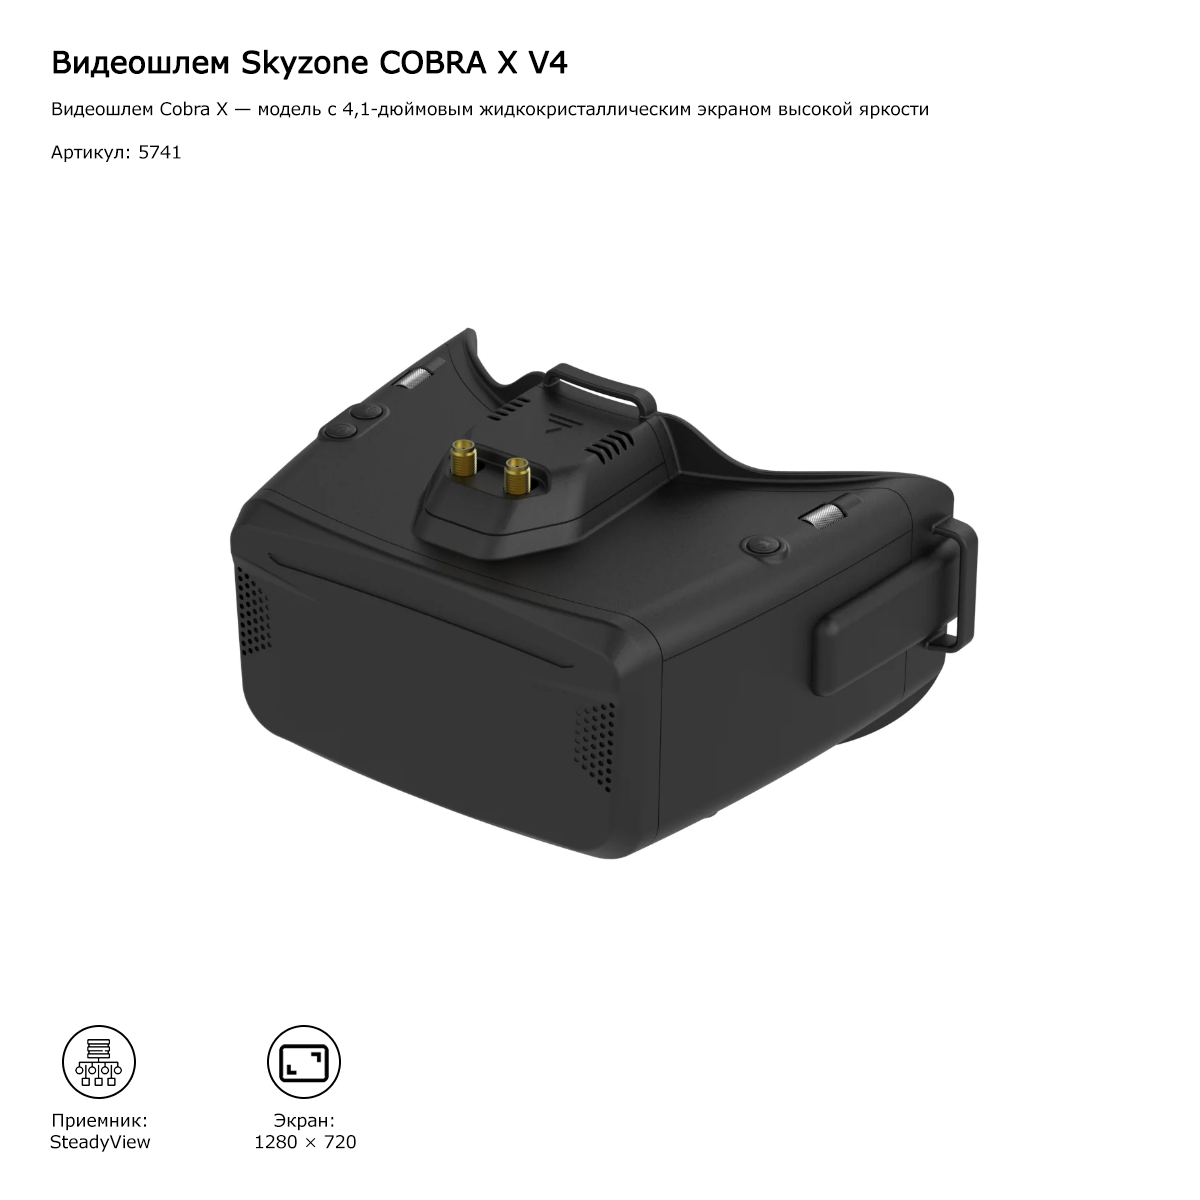 Видеошлем Skyzone COBRA X V4